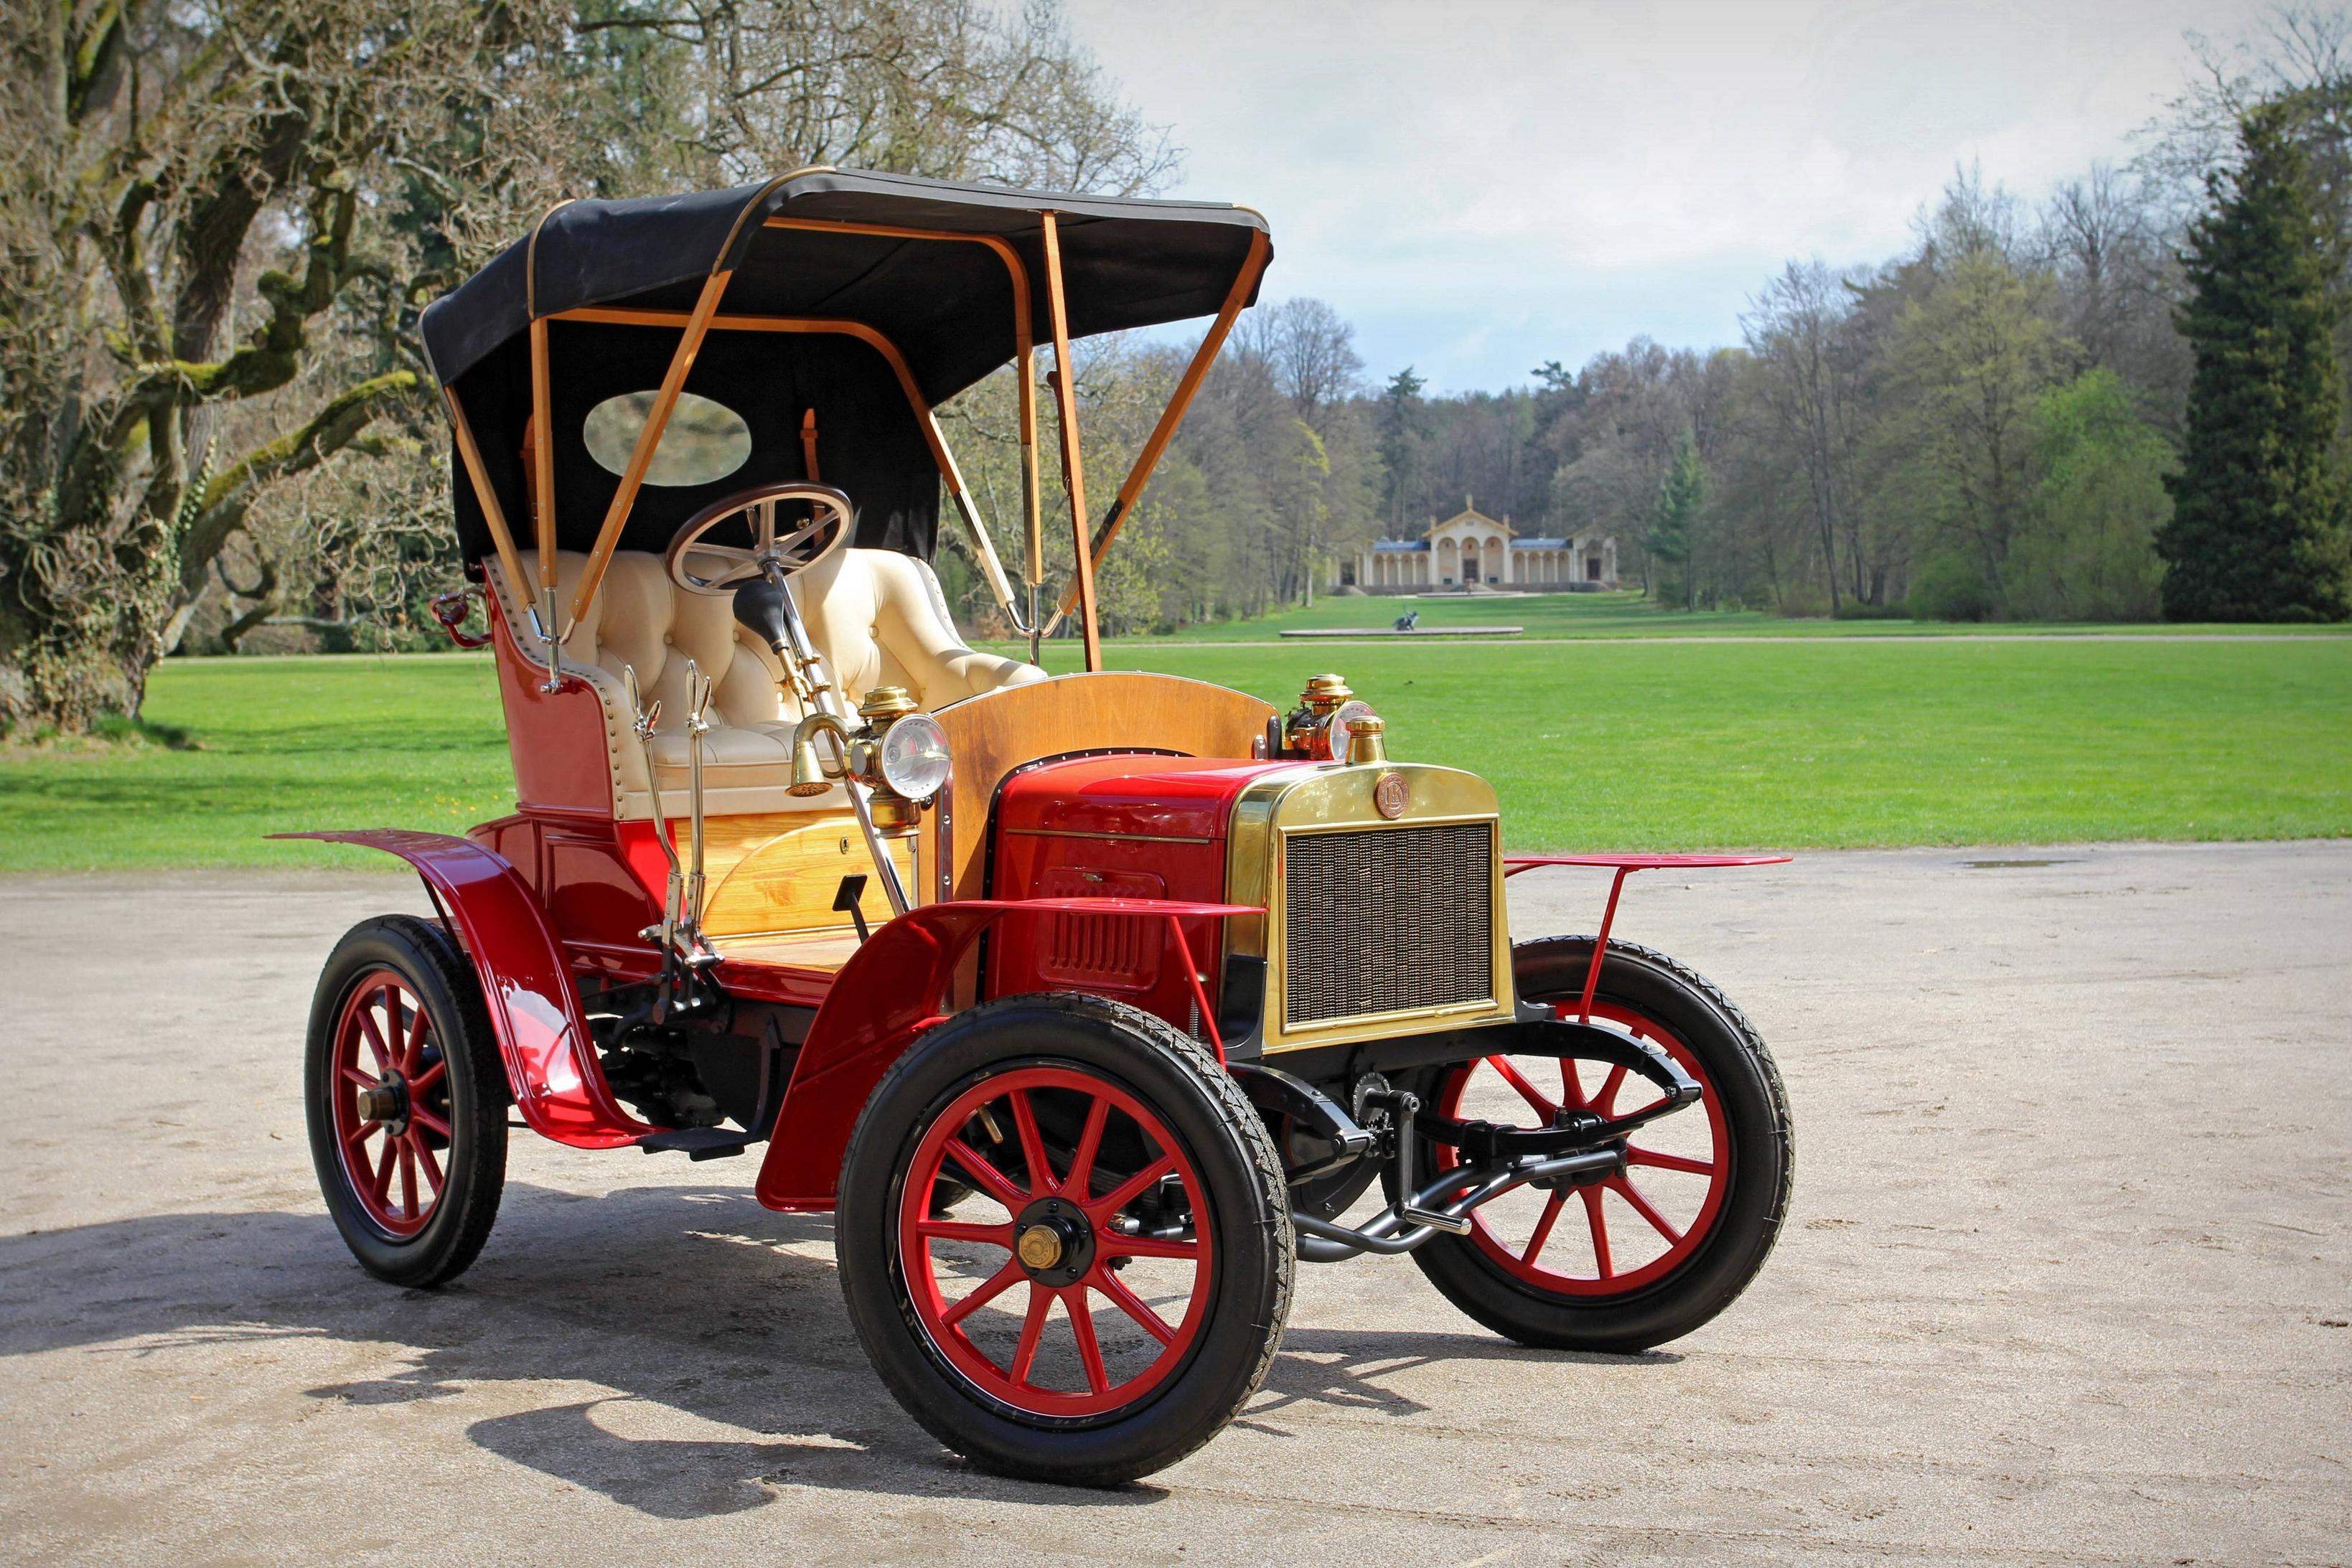 Пр 1 машина. Автомобиль Laurin and Klement voiturette 1905 года. Автомобиль Шкода voiturette 1905 года. Laurin & Klement машины. Шкода самая первая модель 1895.